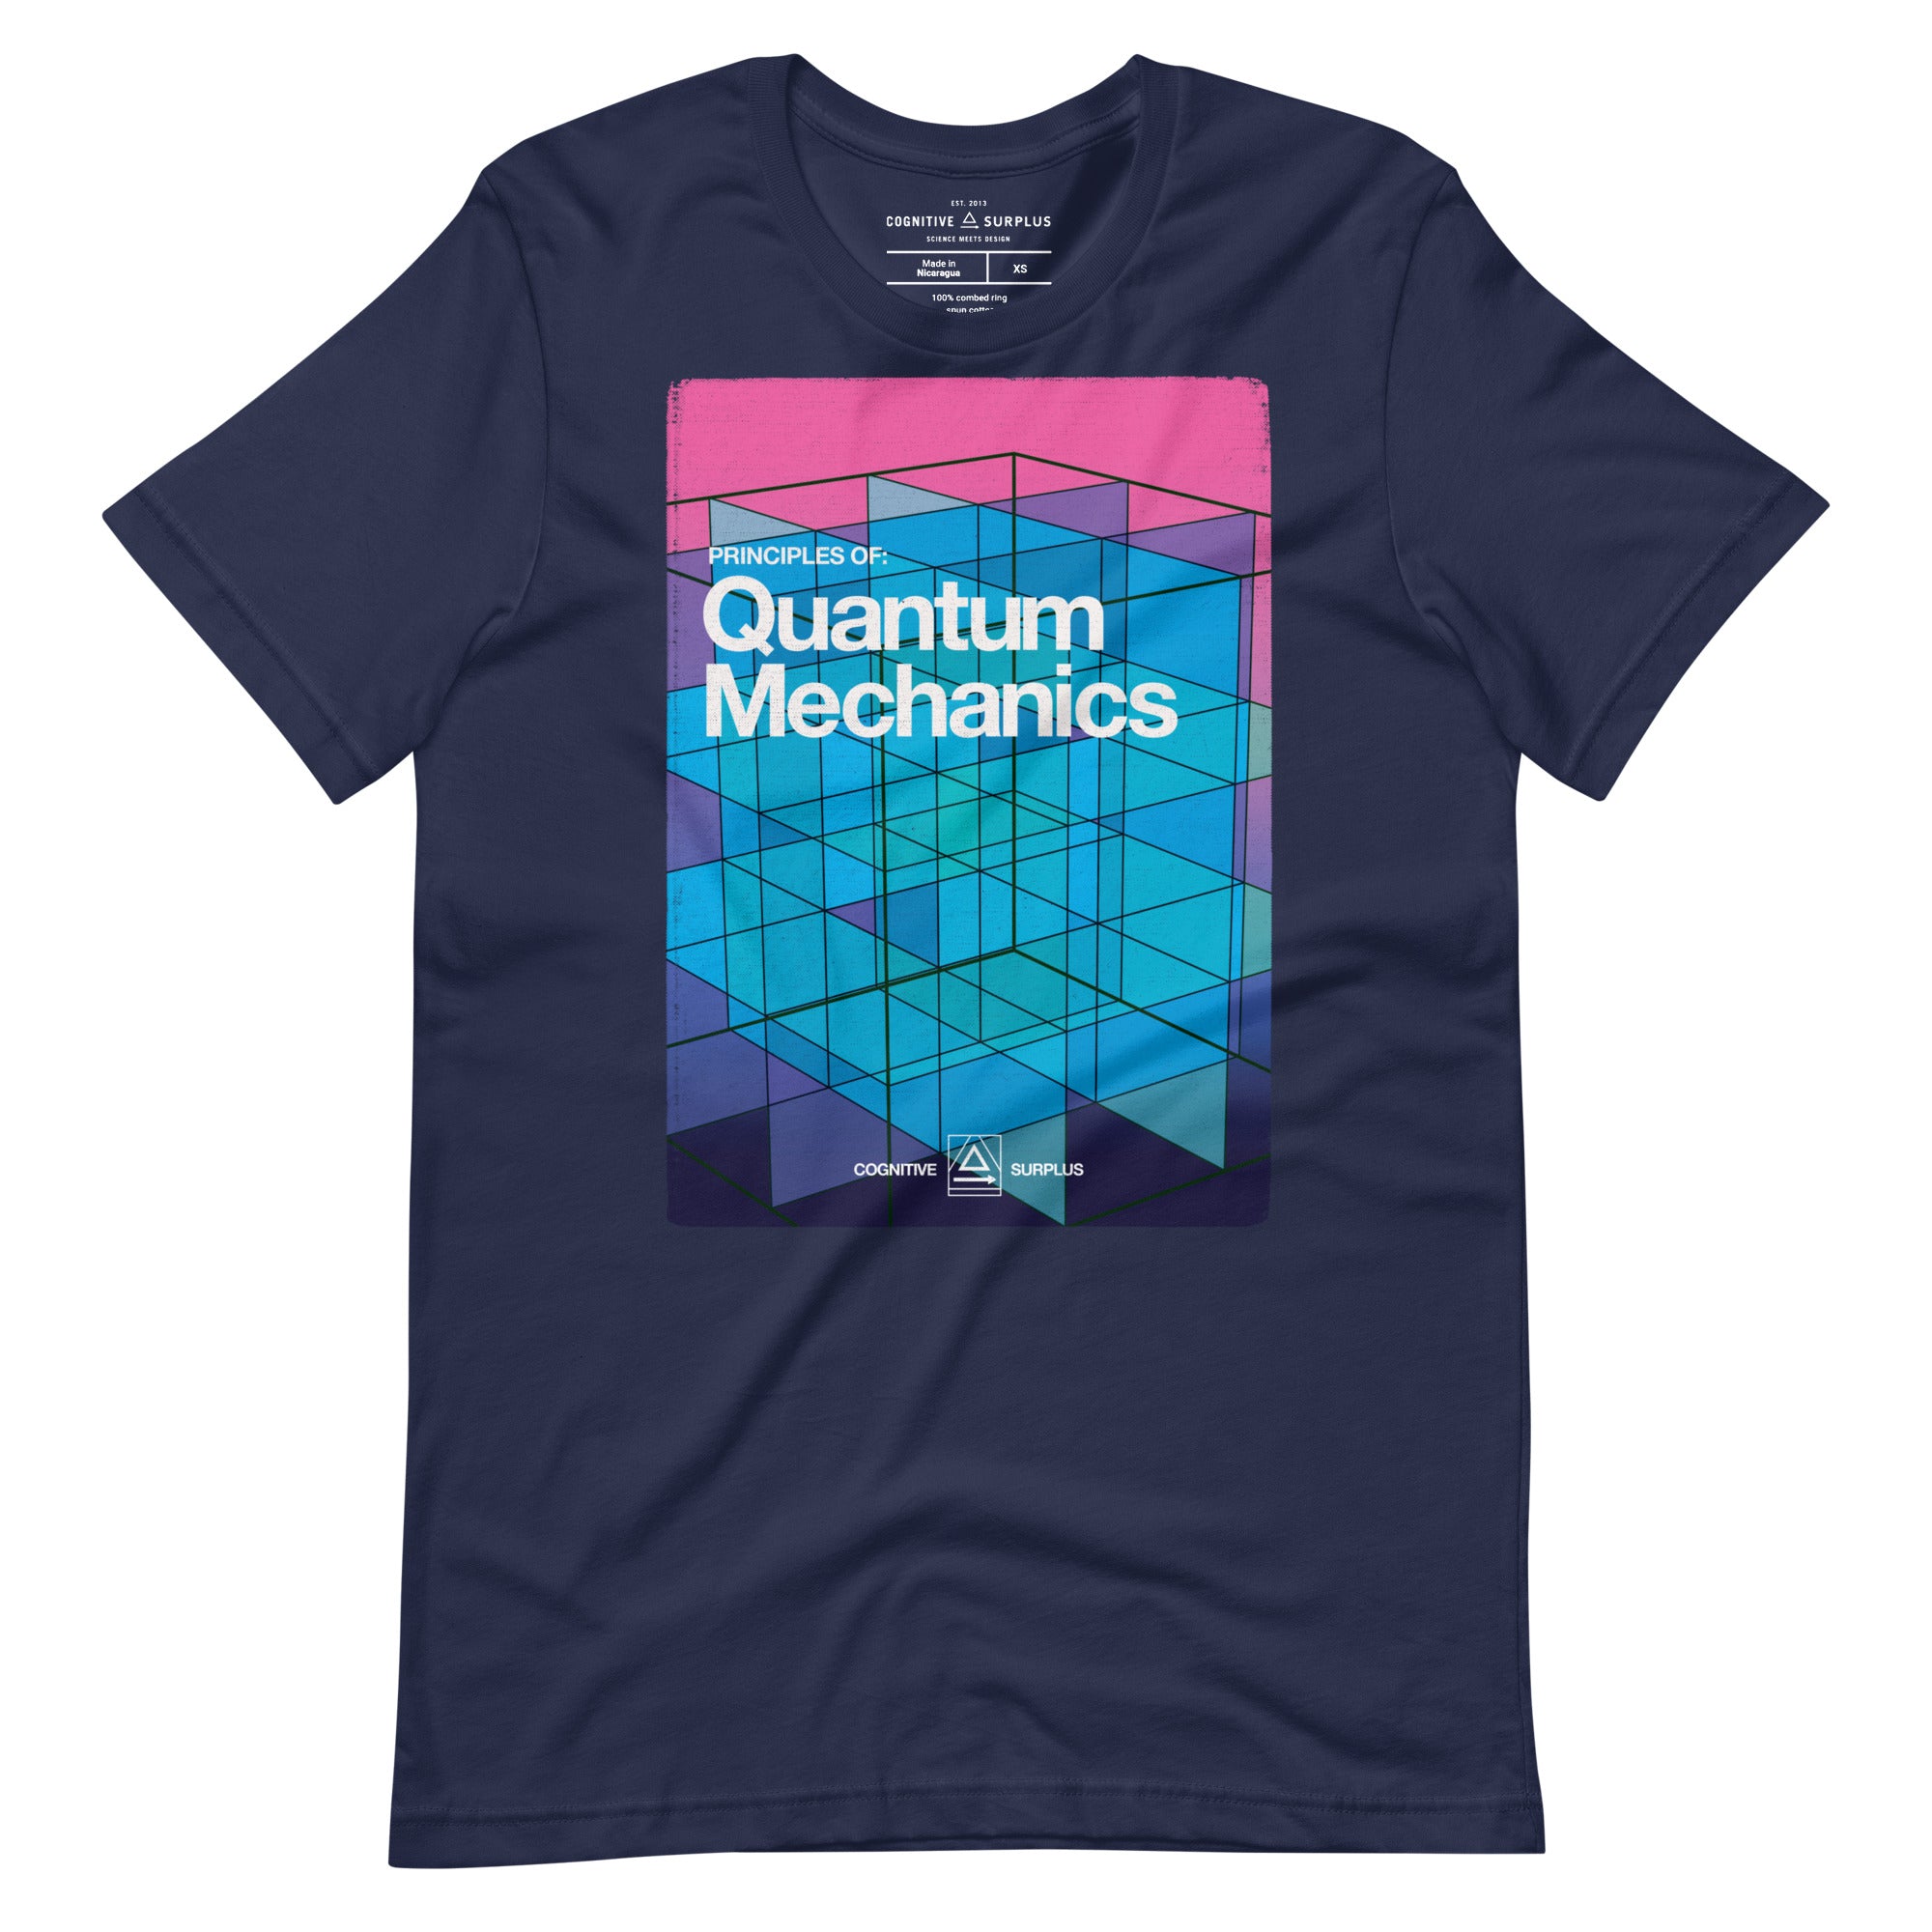 Principles of Quantum Mechanics Graphic Tee